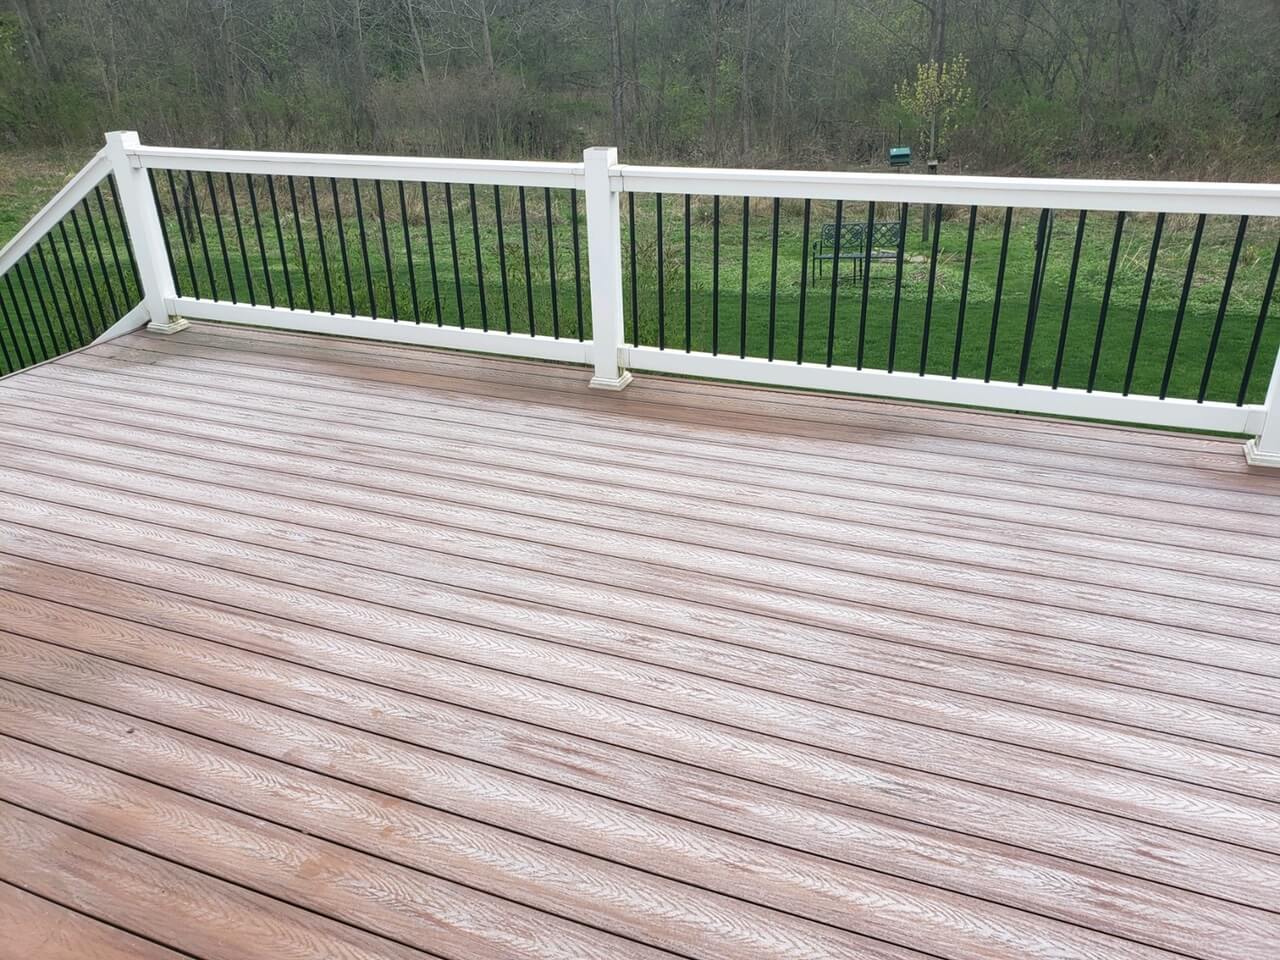 Faded wood deck floor